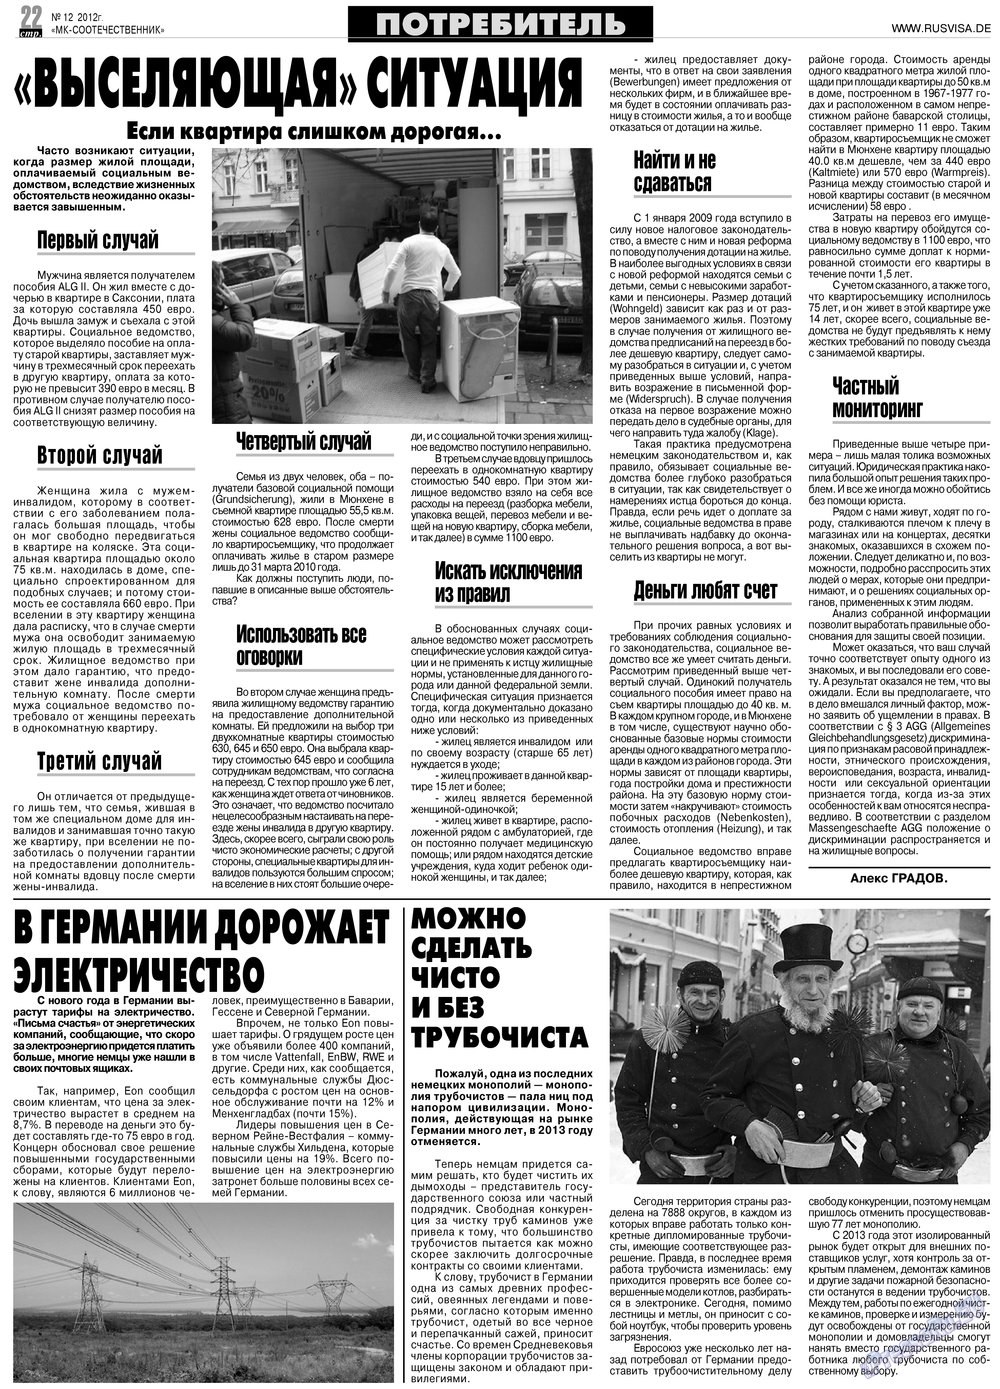 МК-Германия планета мнений, газета. 2012 №12 стр.22